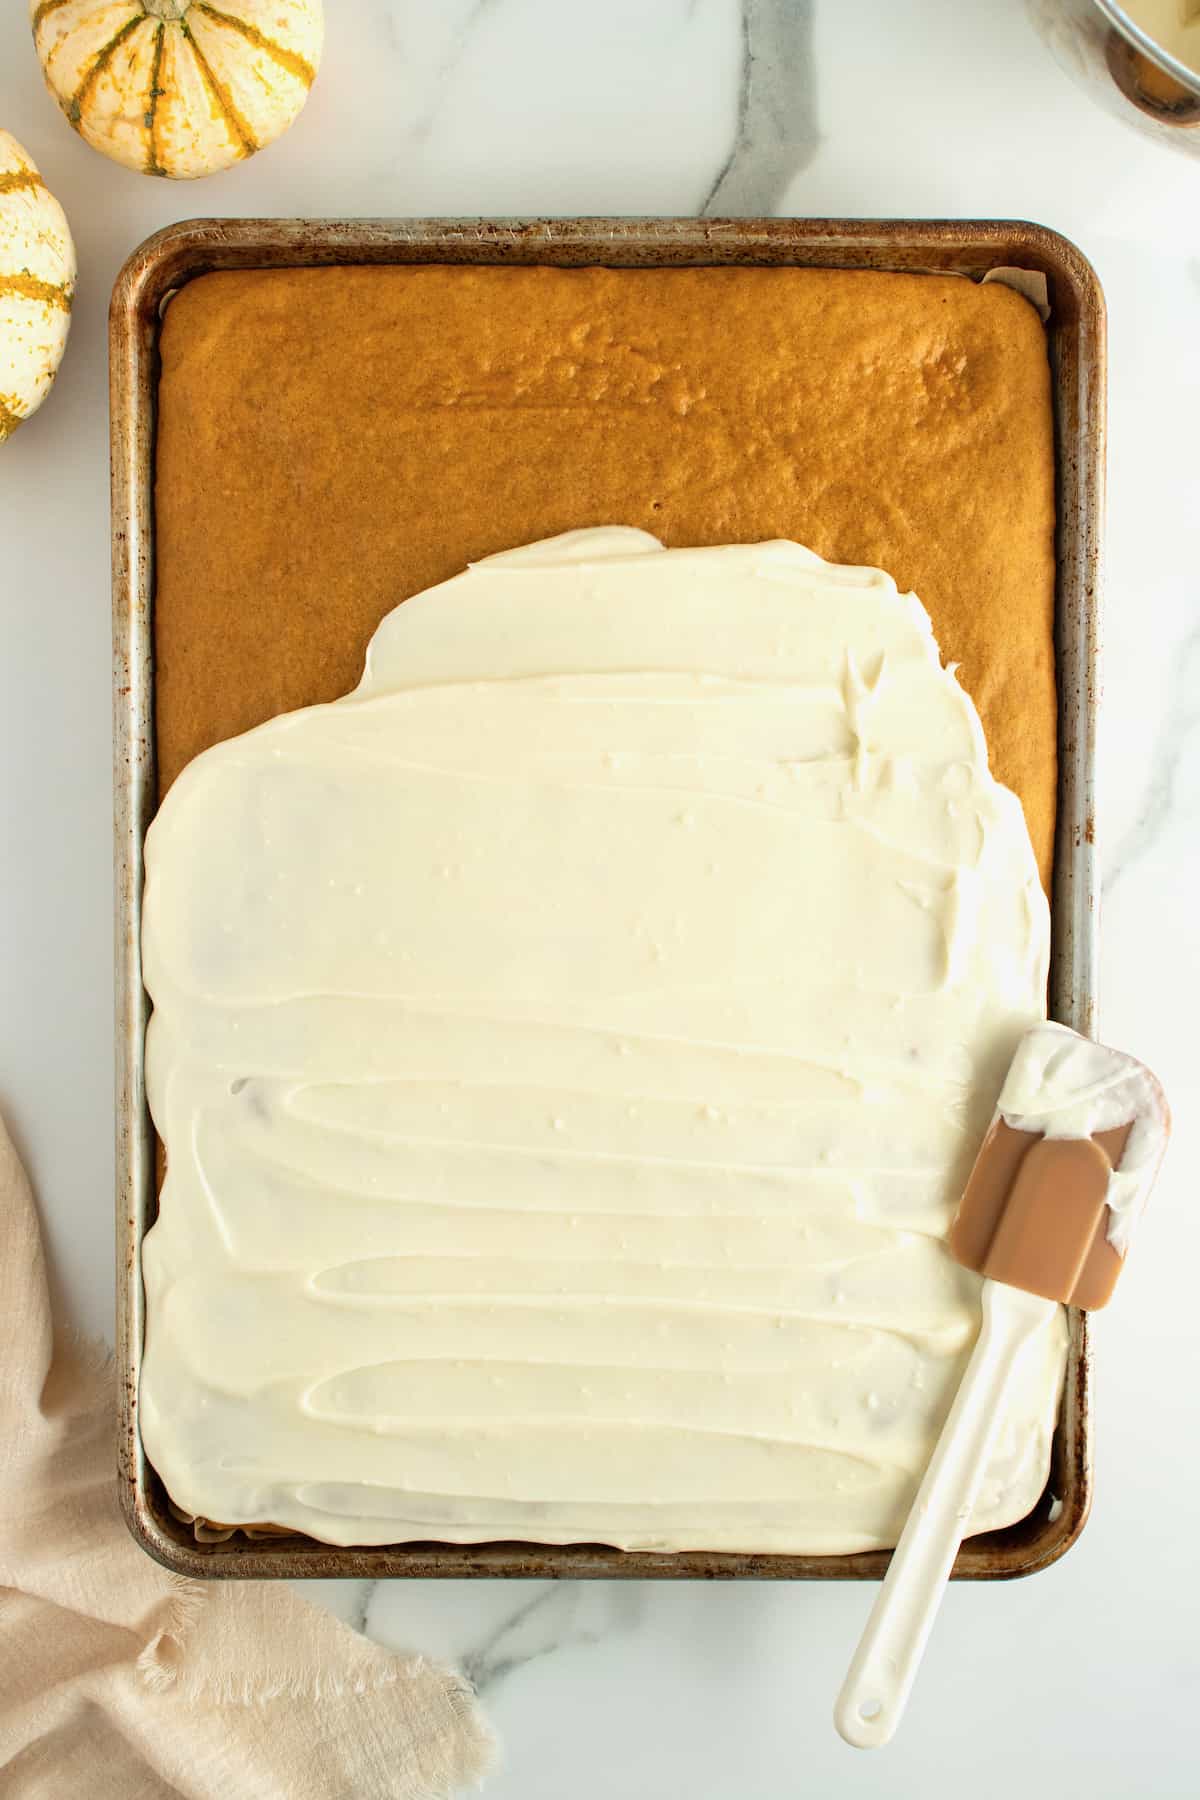 How to Make Pumpkin Sheet Cake by The BakerMama